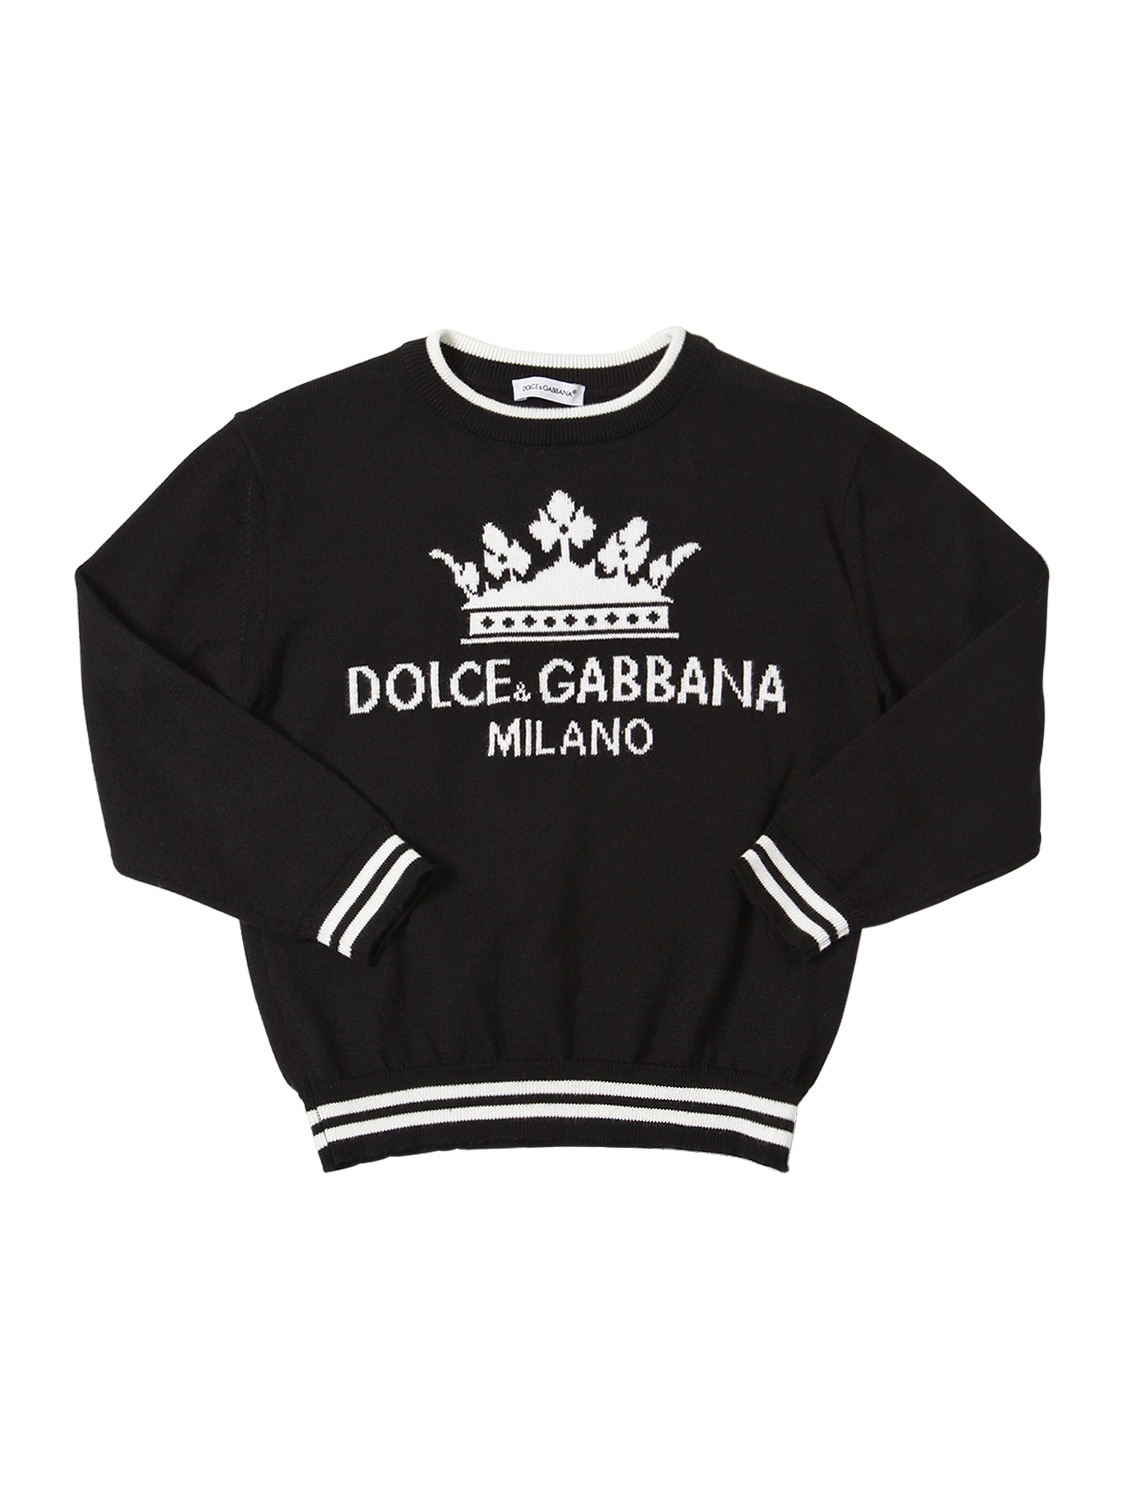 dolce and gabbana milano logo crew sweatshirt